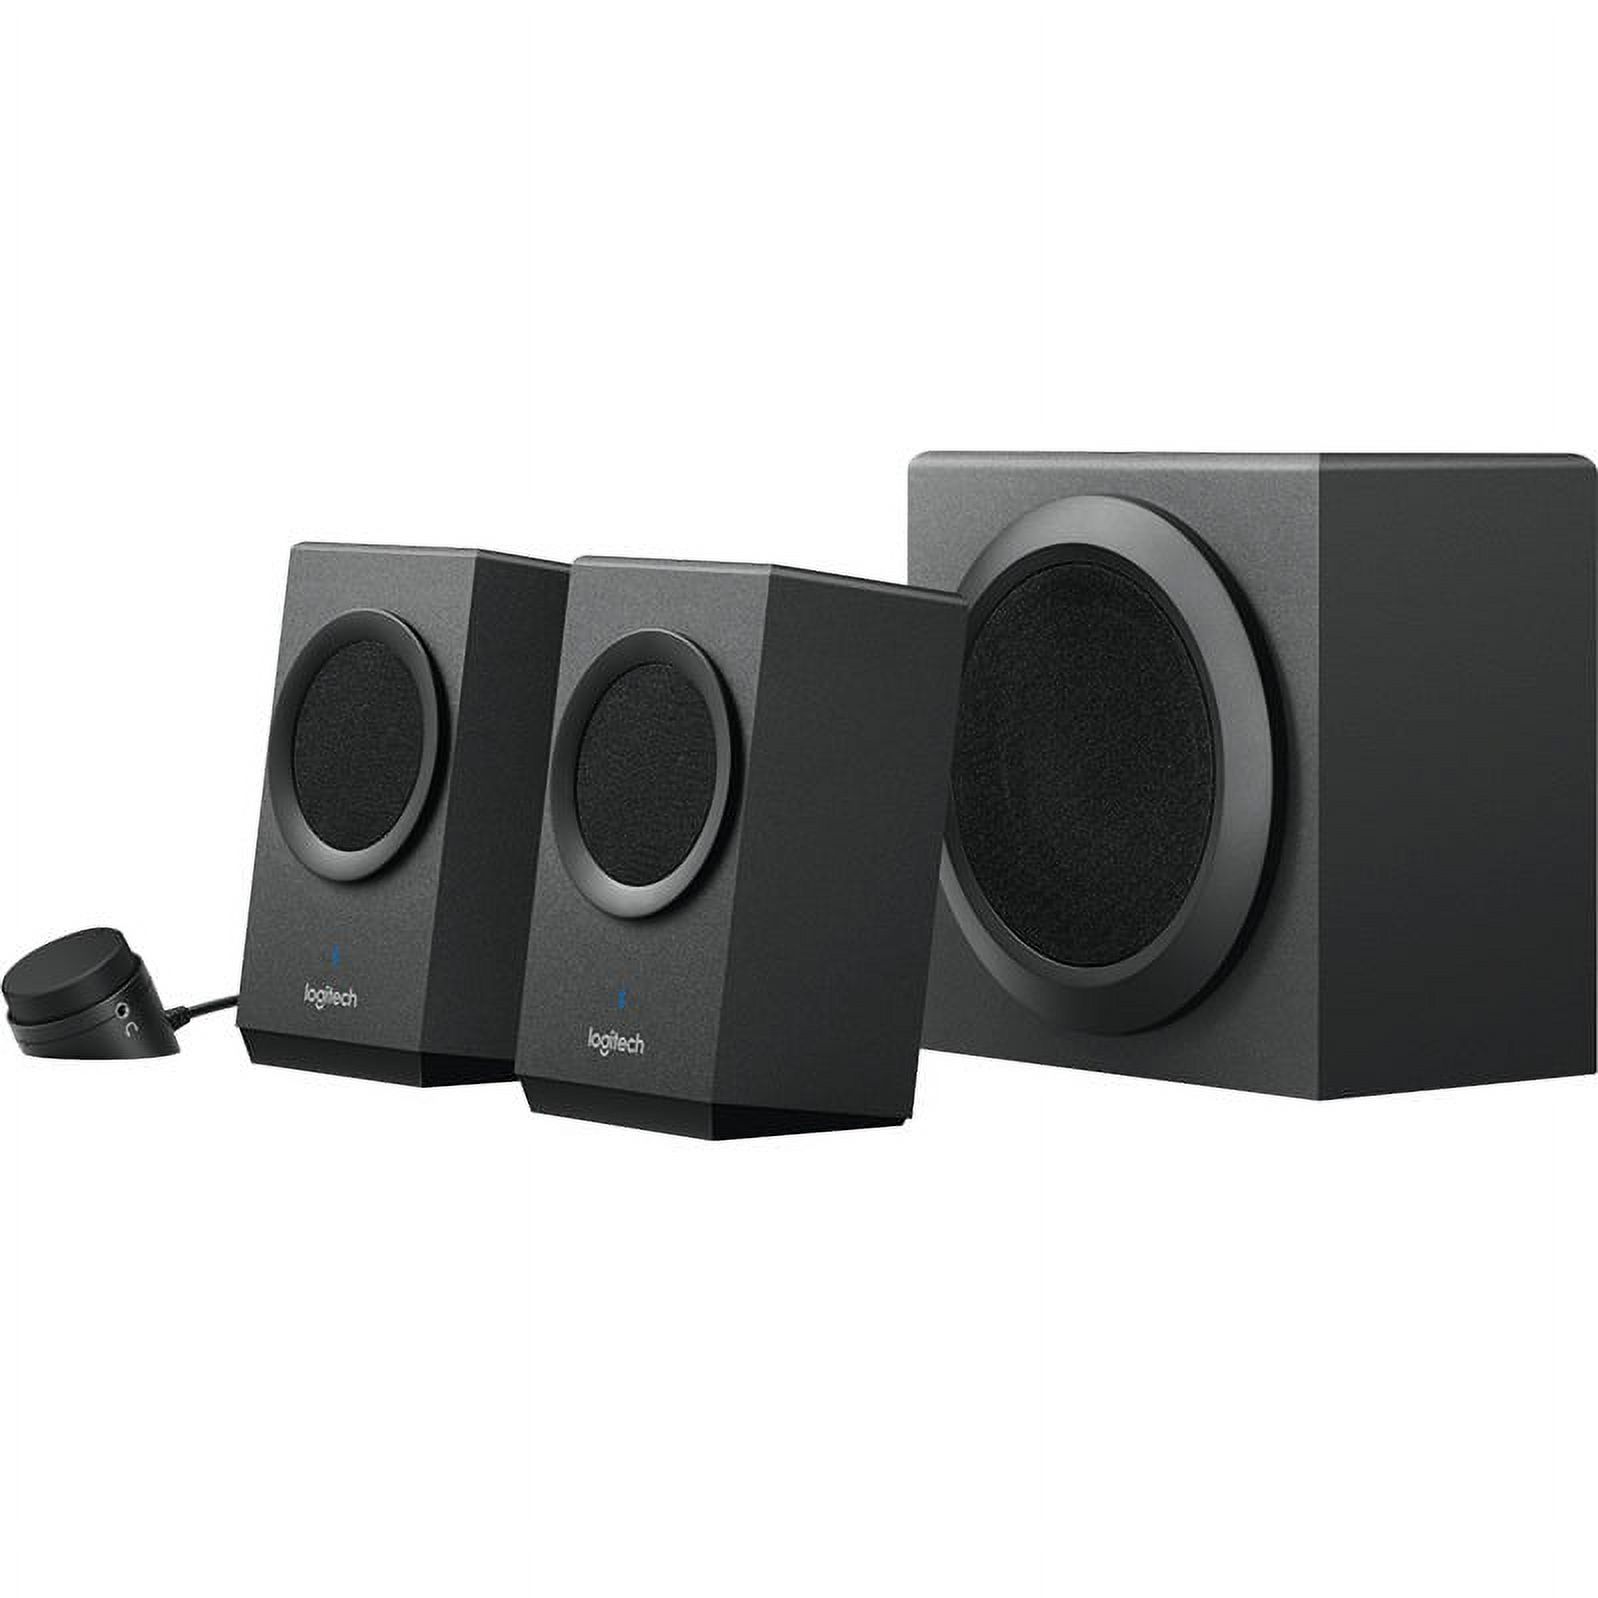 Logitech Z337 - Speaker system - for PC - 2.1-channel - 40-watt (total) - image 1 of 2